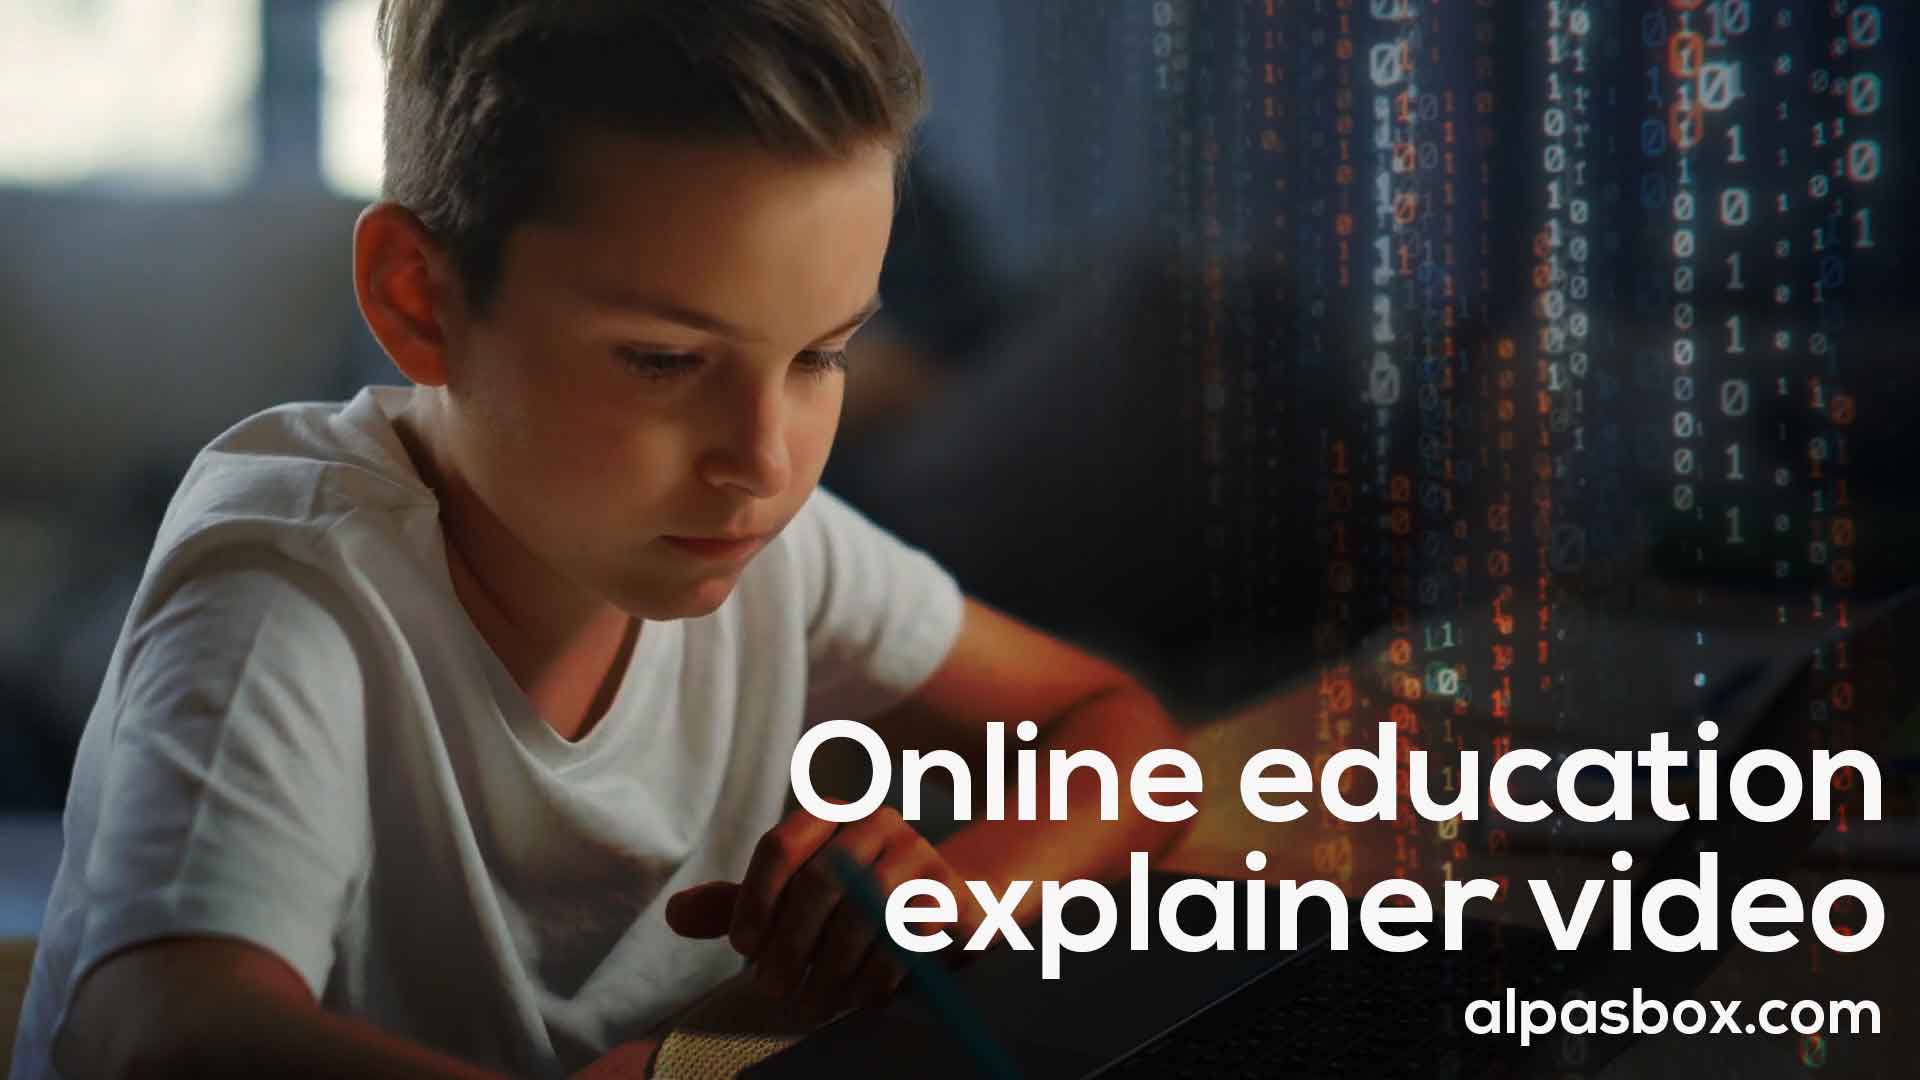 Online education explainer video